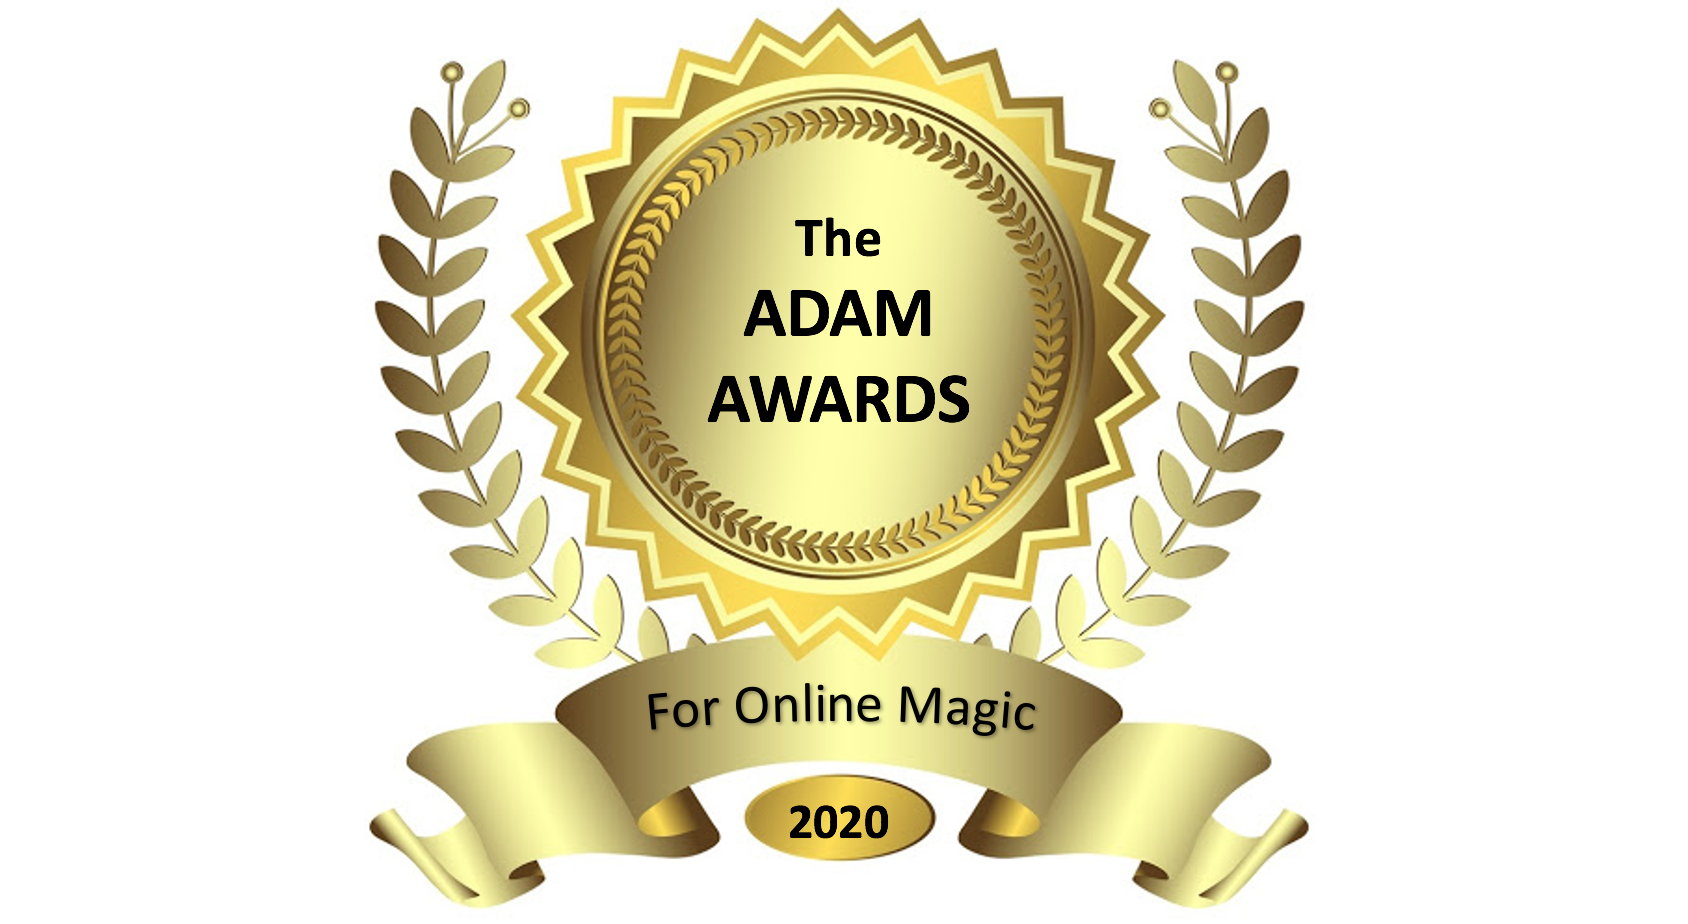 The Adam Awards for Online Magic